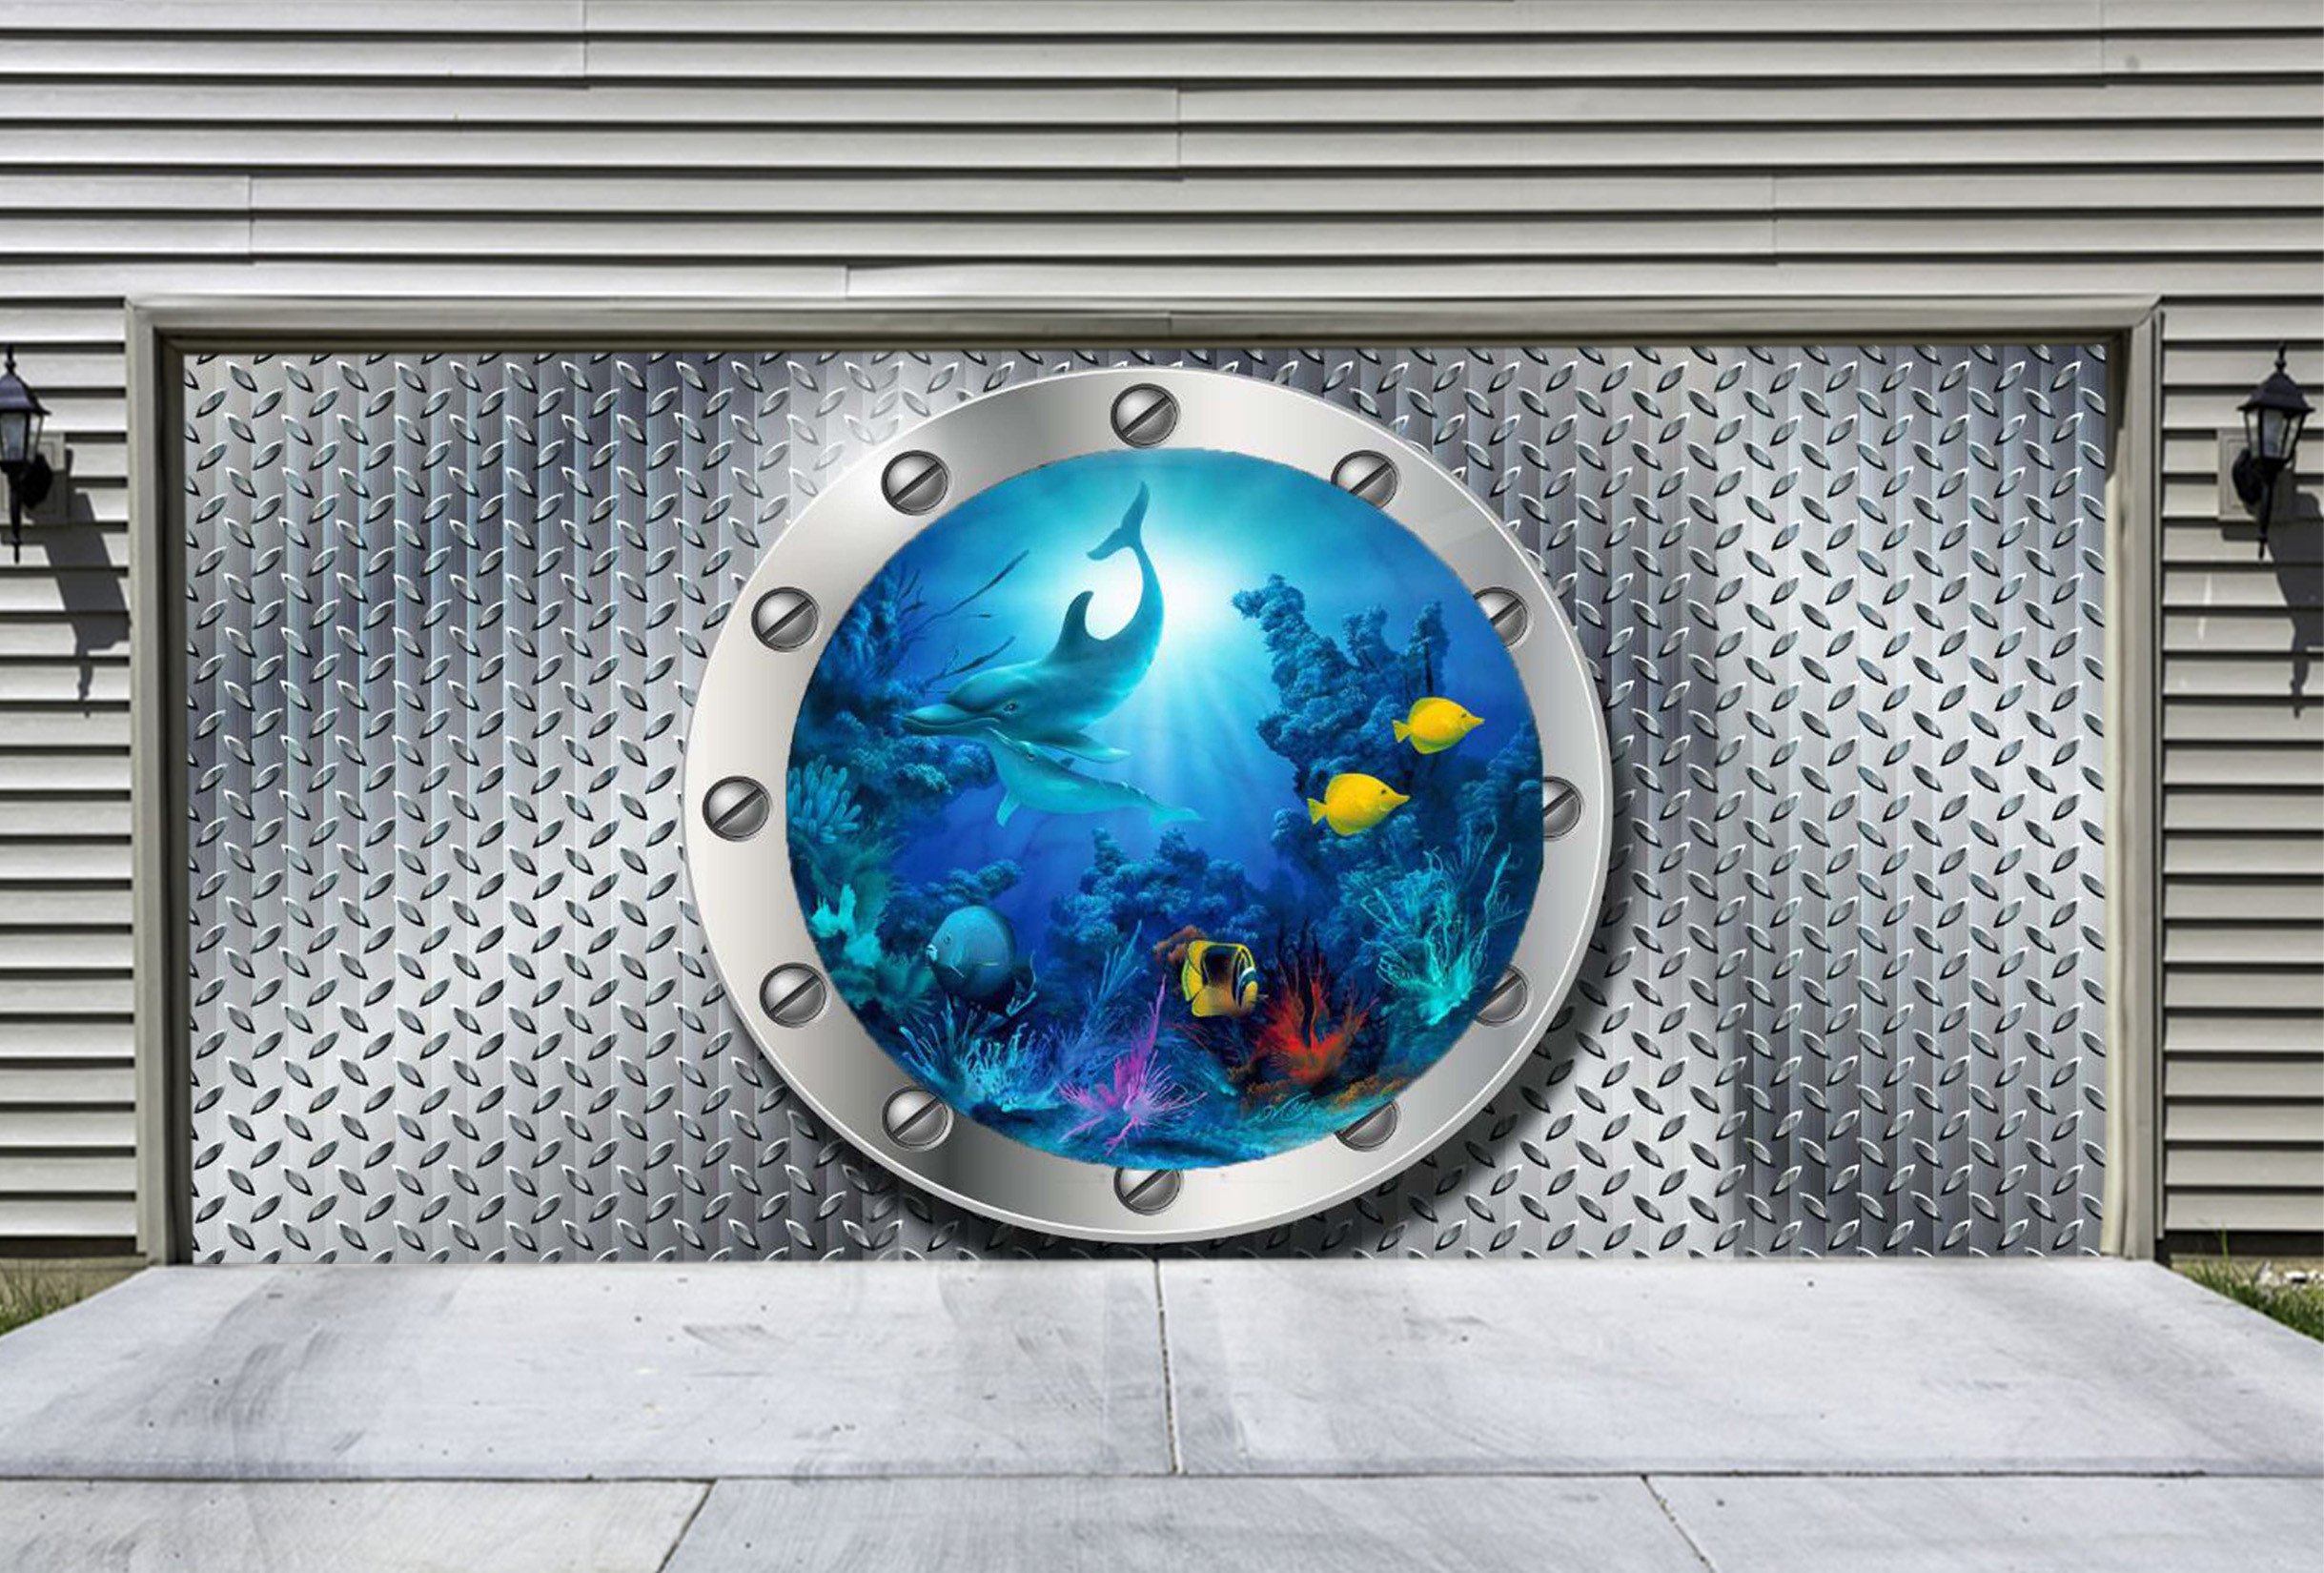 3D Metal Window Seabed World 02 Garage Door Mural Wallpaper AJ Wallpaper 